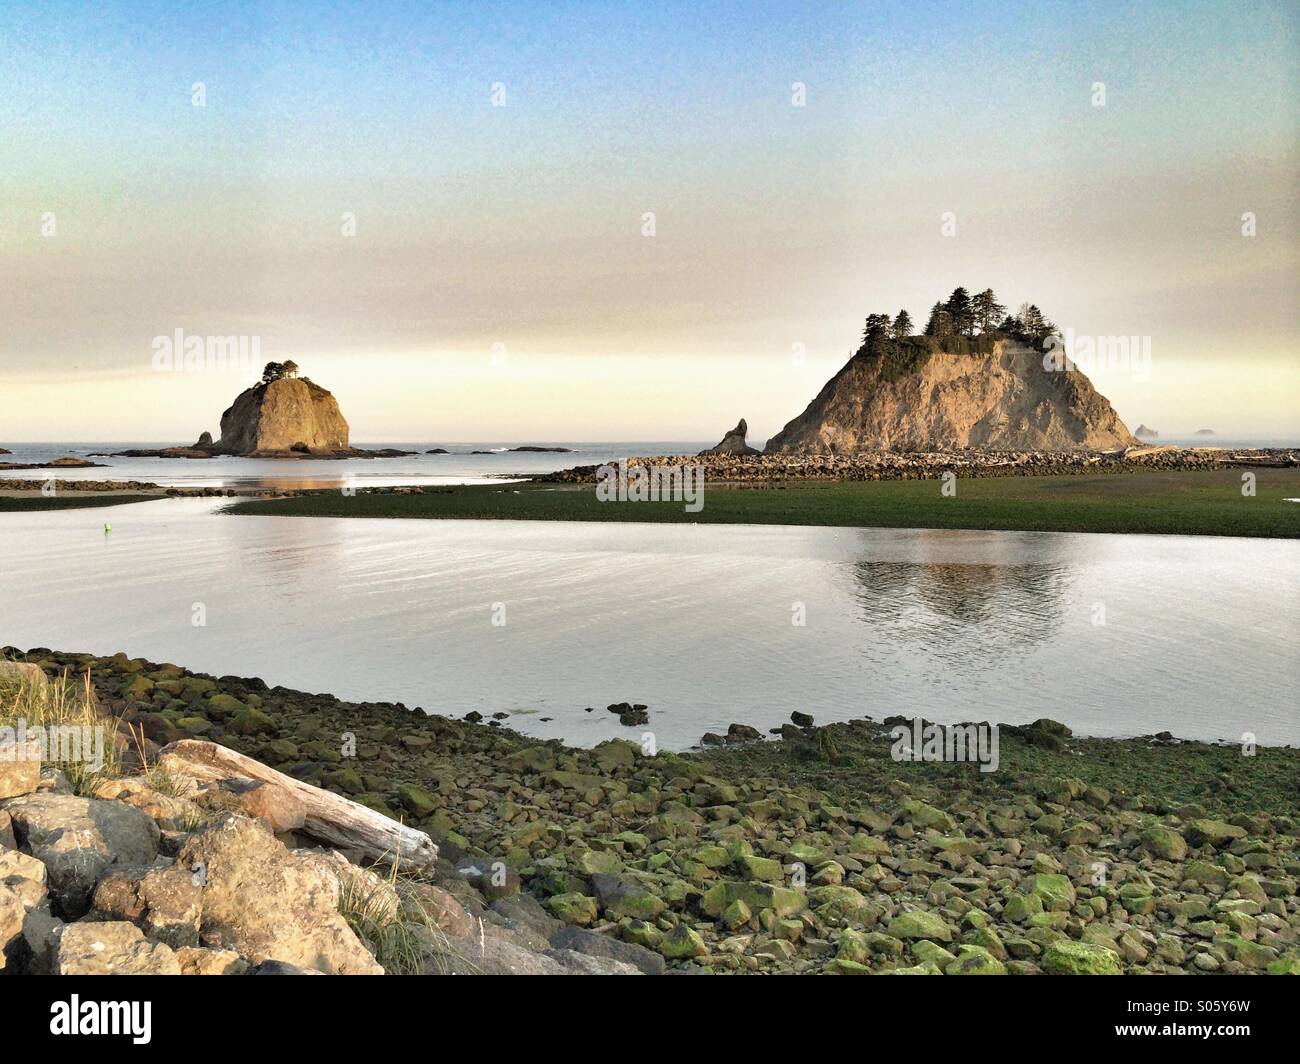 Quillayute River mouth and rocky headlands, La Push, Olympic Peninsula, Washington, Stock Photo